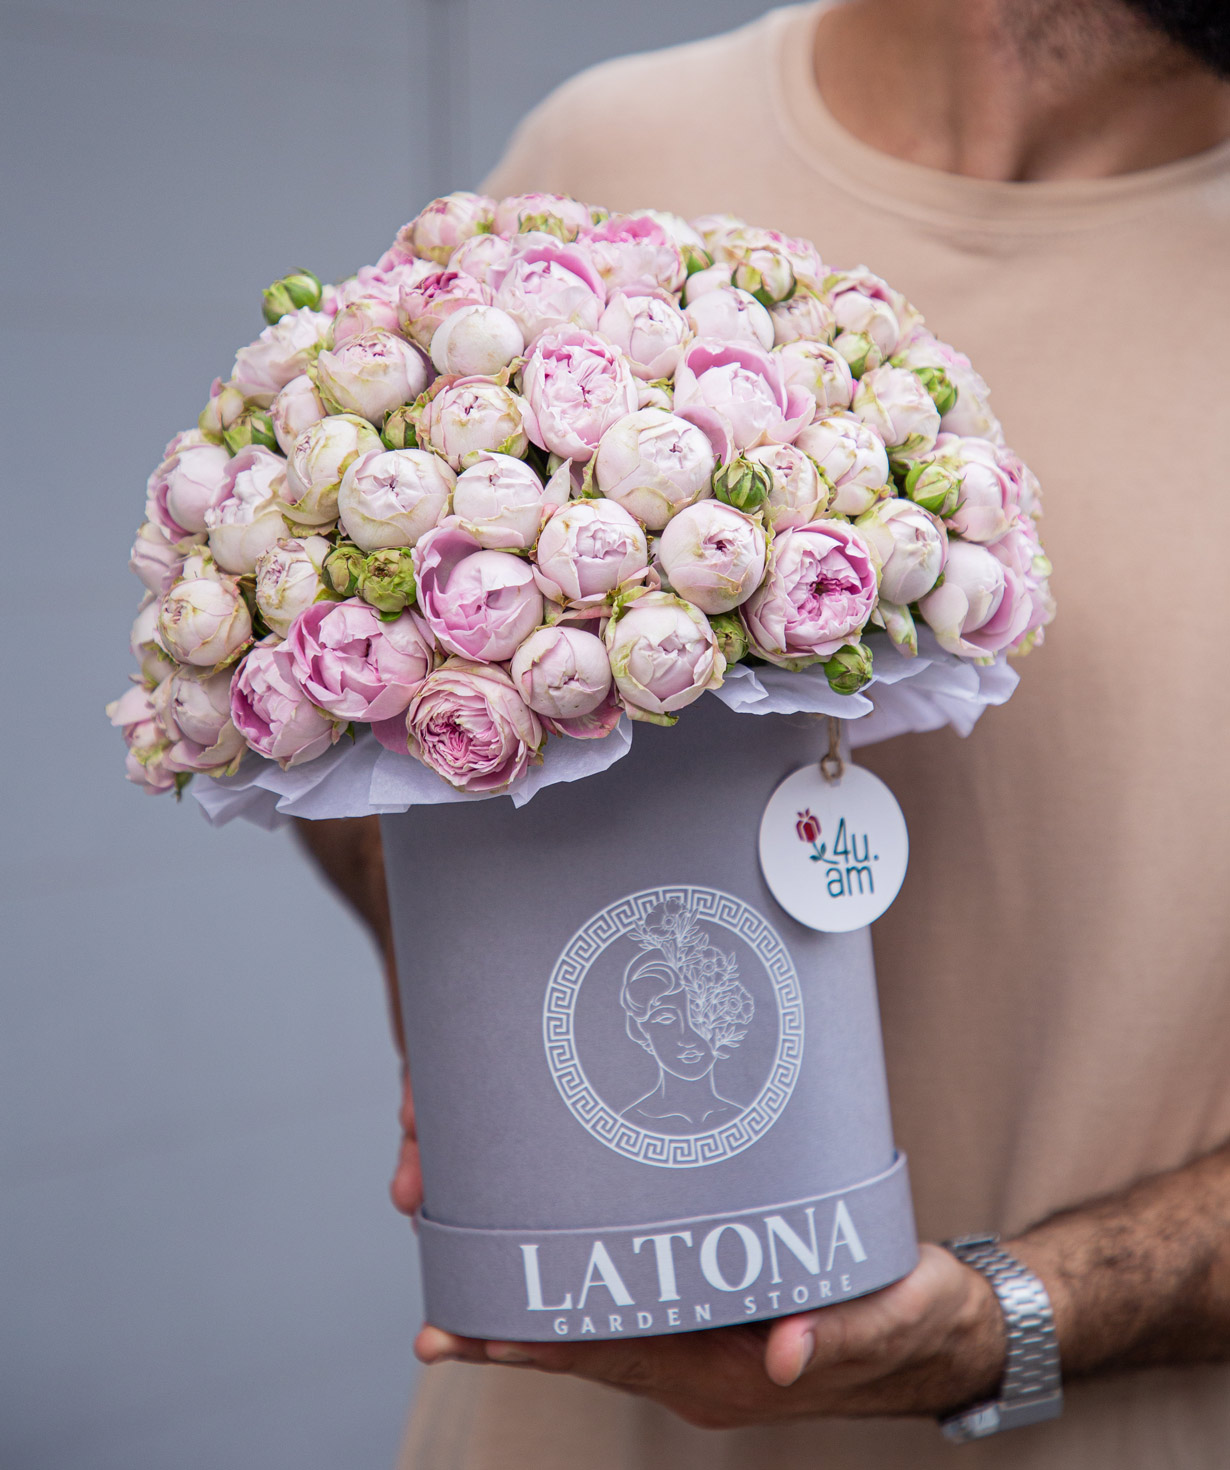 Композиция `Latona` с пионовидными розами